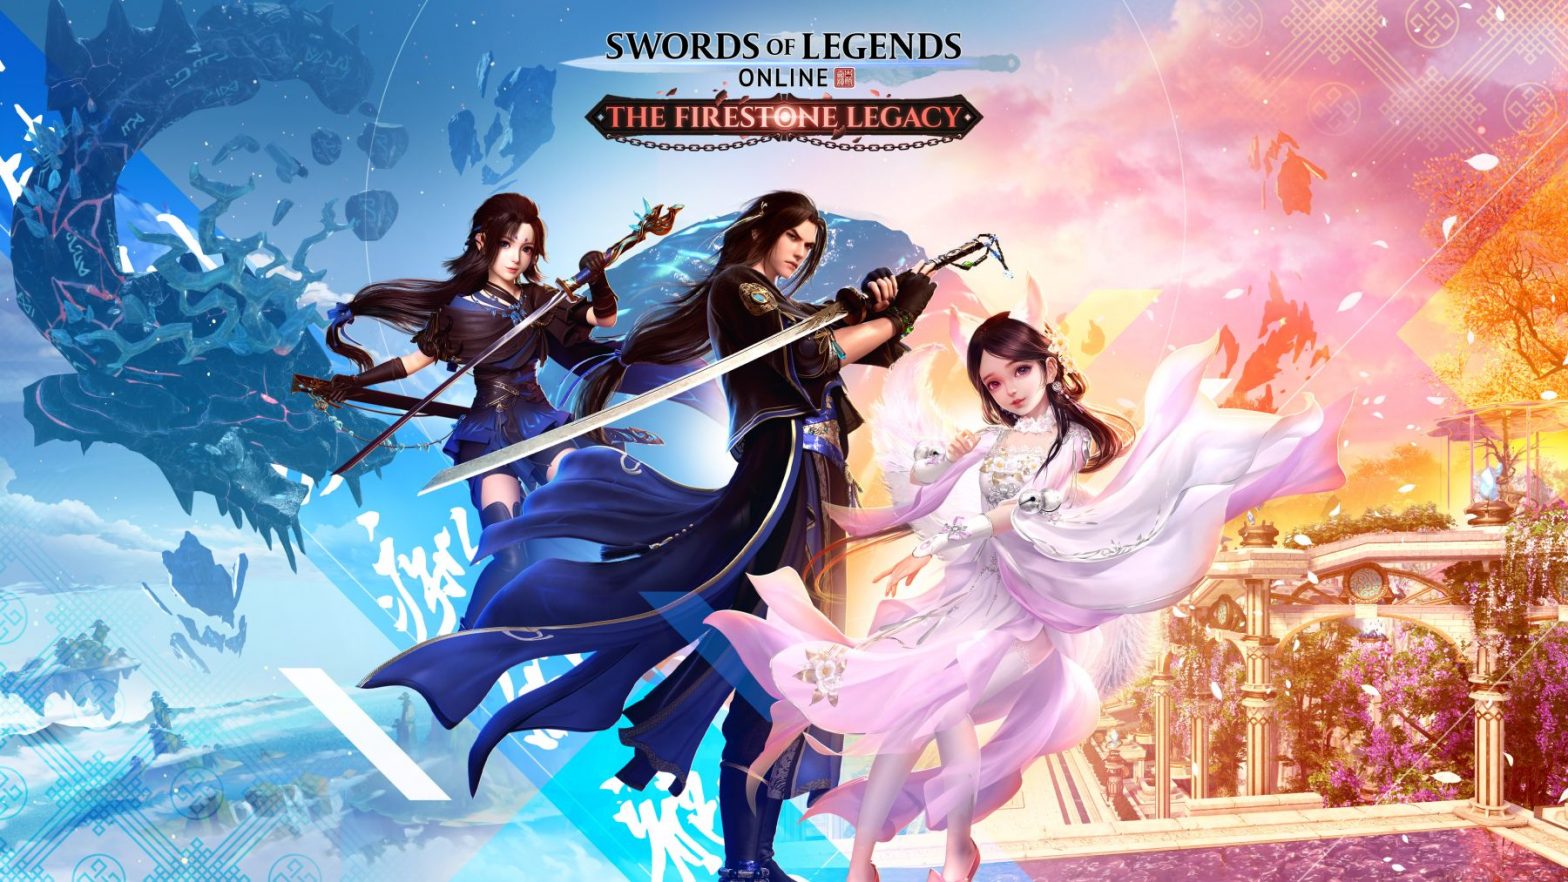 Swords of Legends Online Adds New Tanky, Crystal Sword Weilding Warrior Class With Firestone Legacy Update